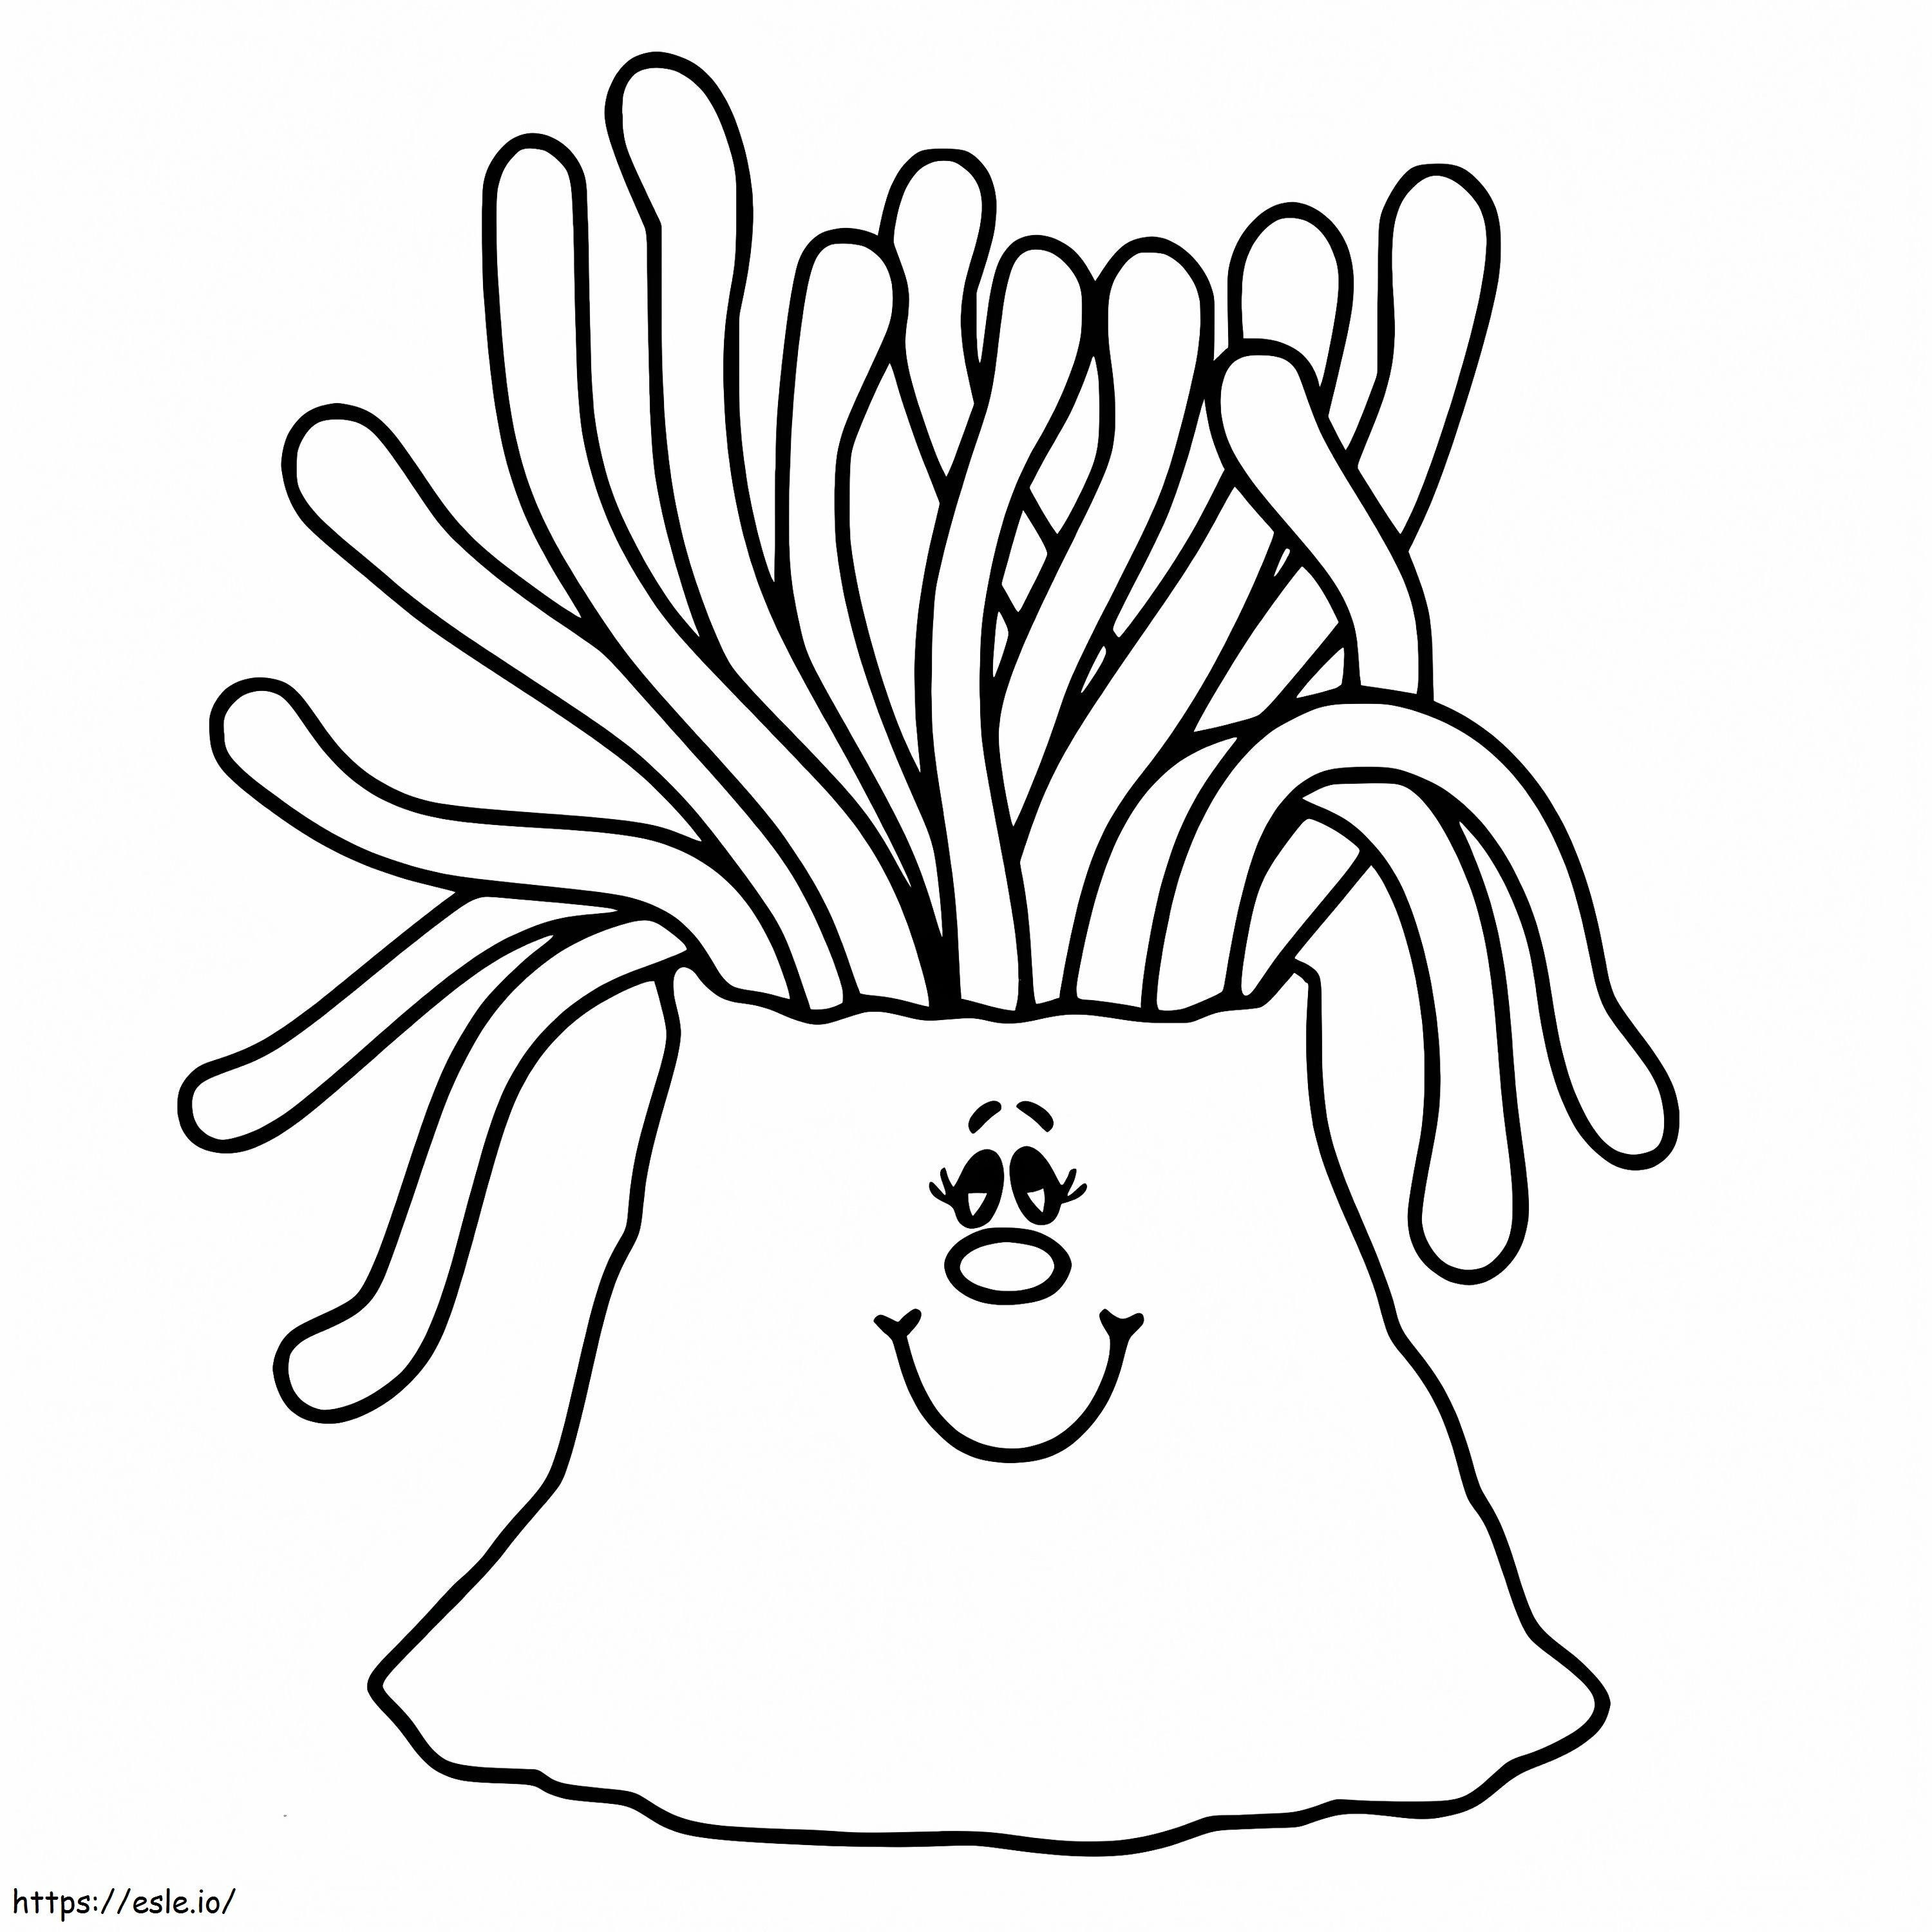 Happy Sea Anemone coloring page